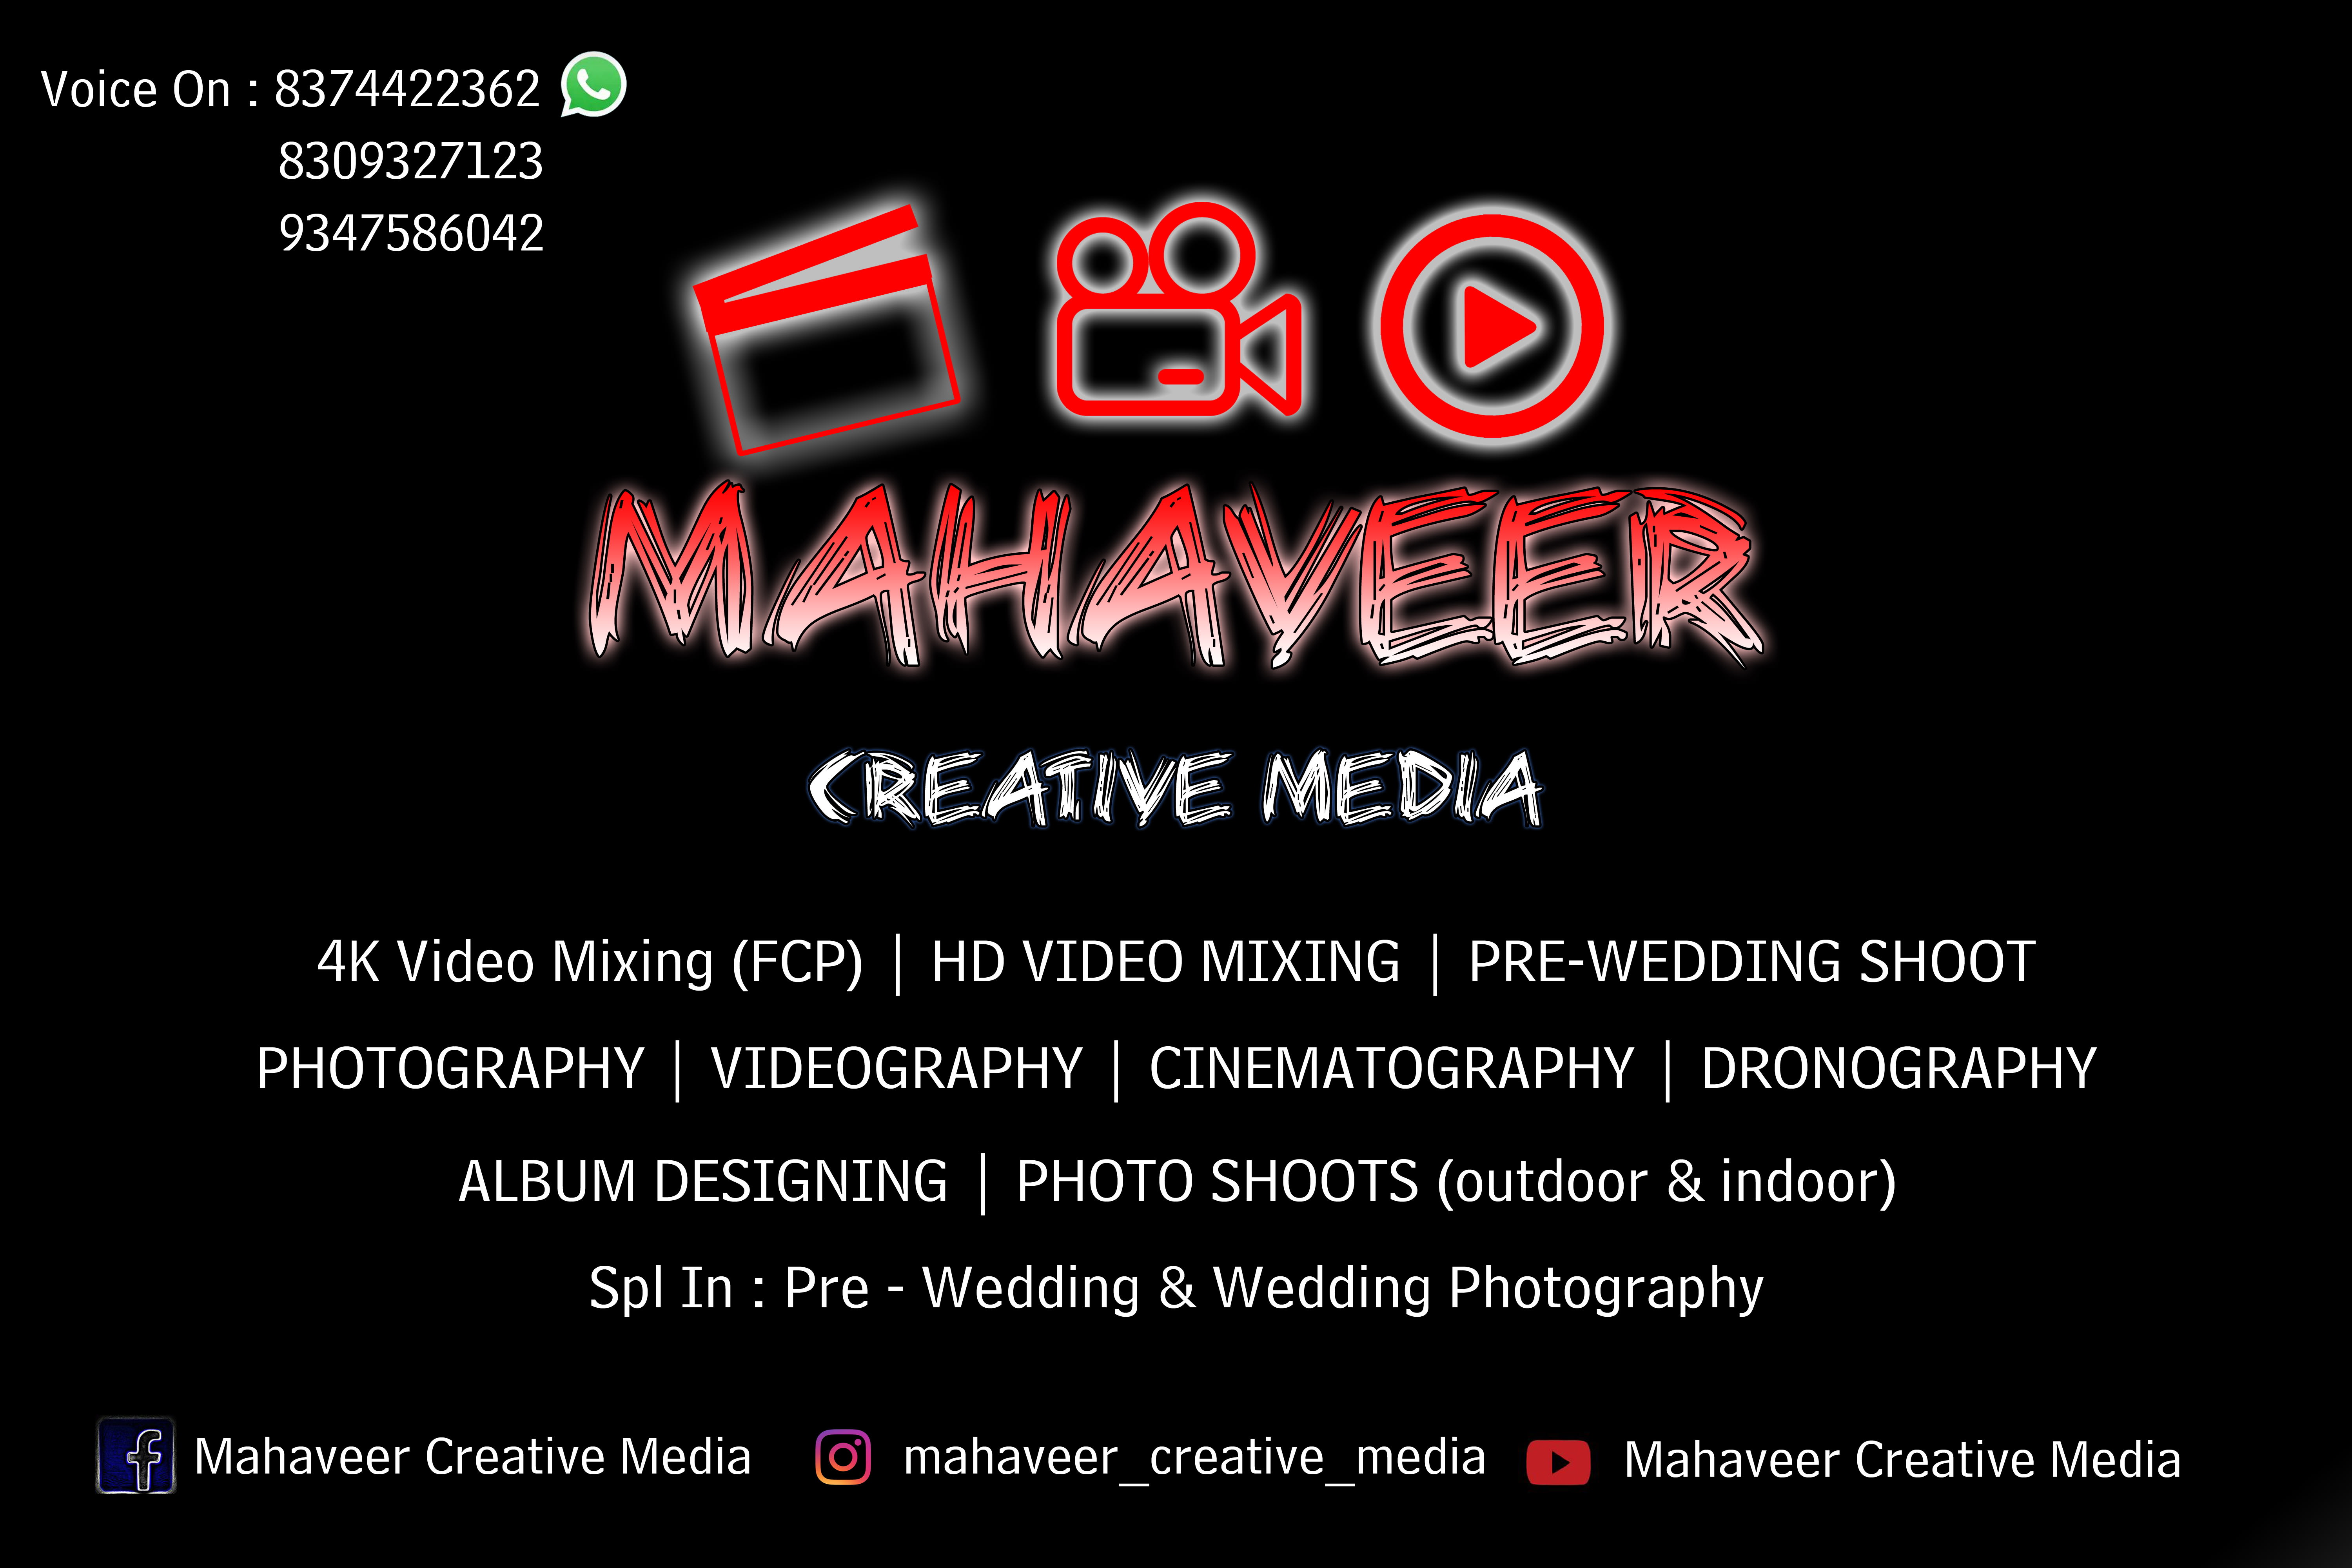 Mahaveer Creative Media